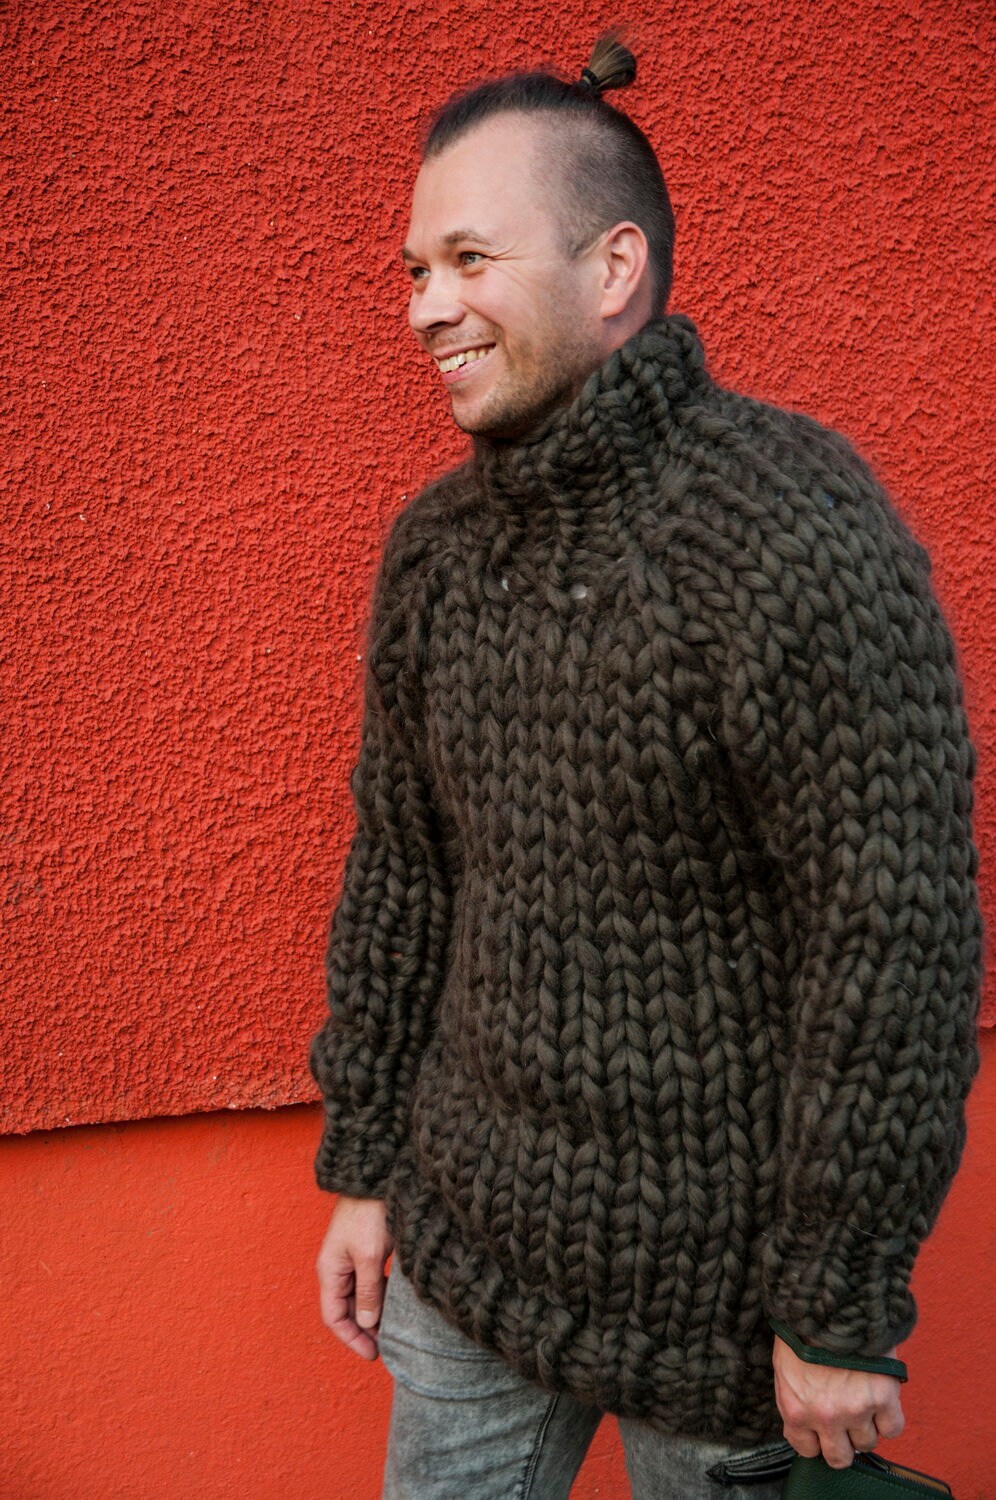 Сhunky knit sweater. Mens sweater. Big knit turtleneck. Bulky | Etsy